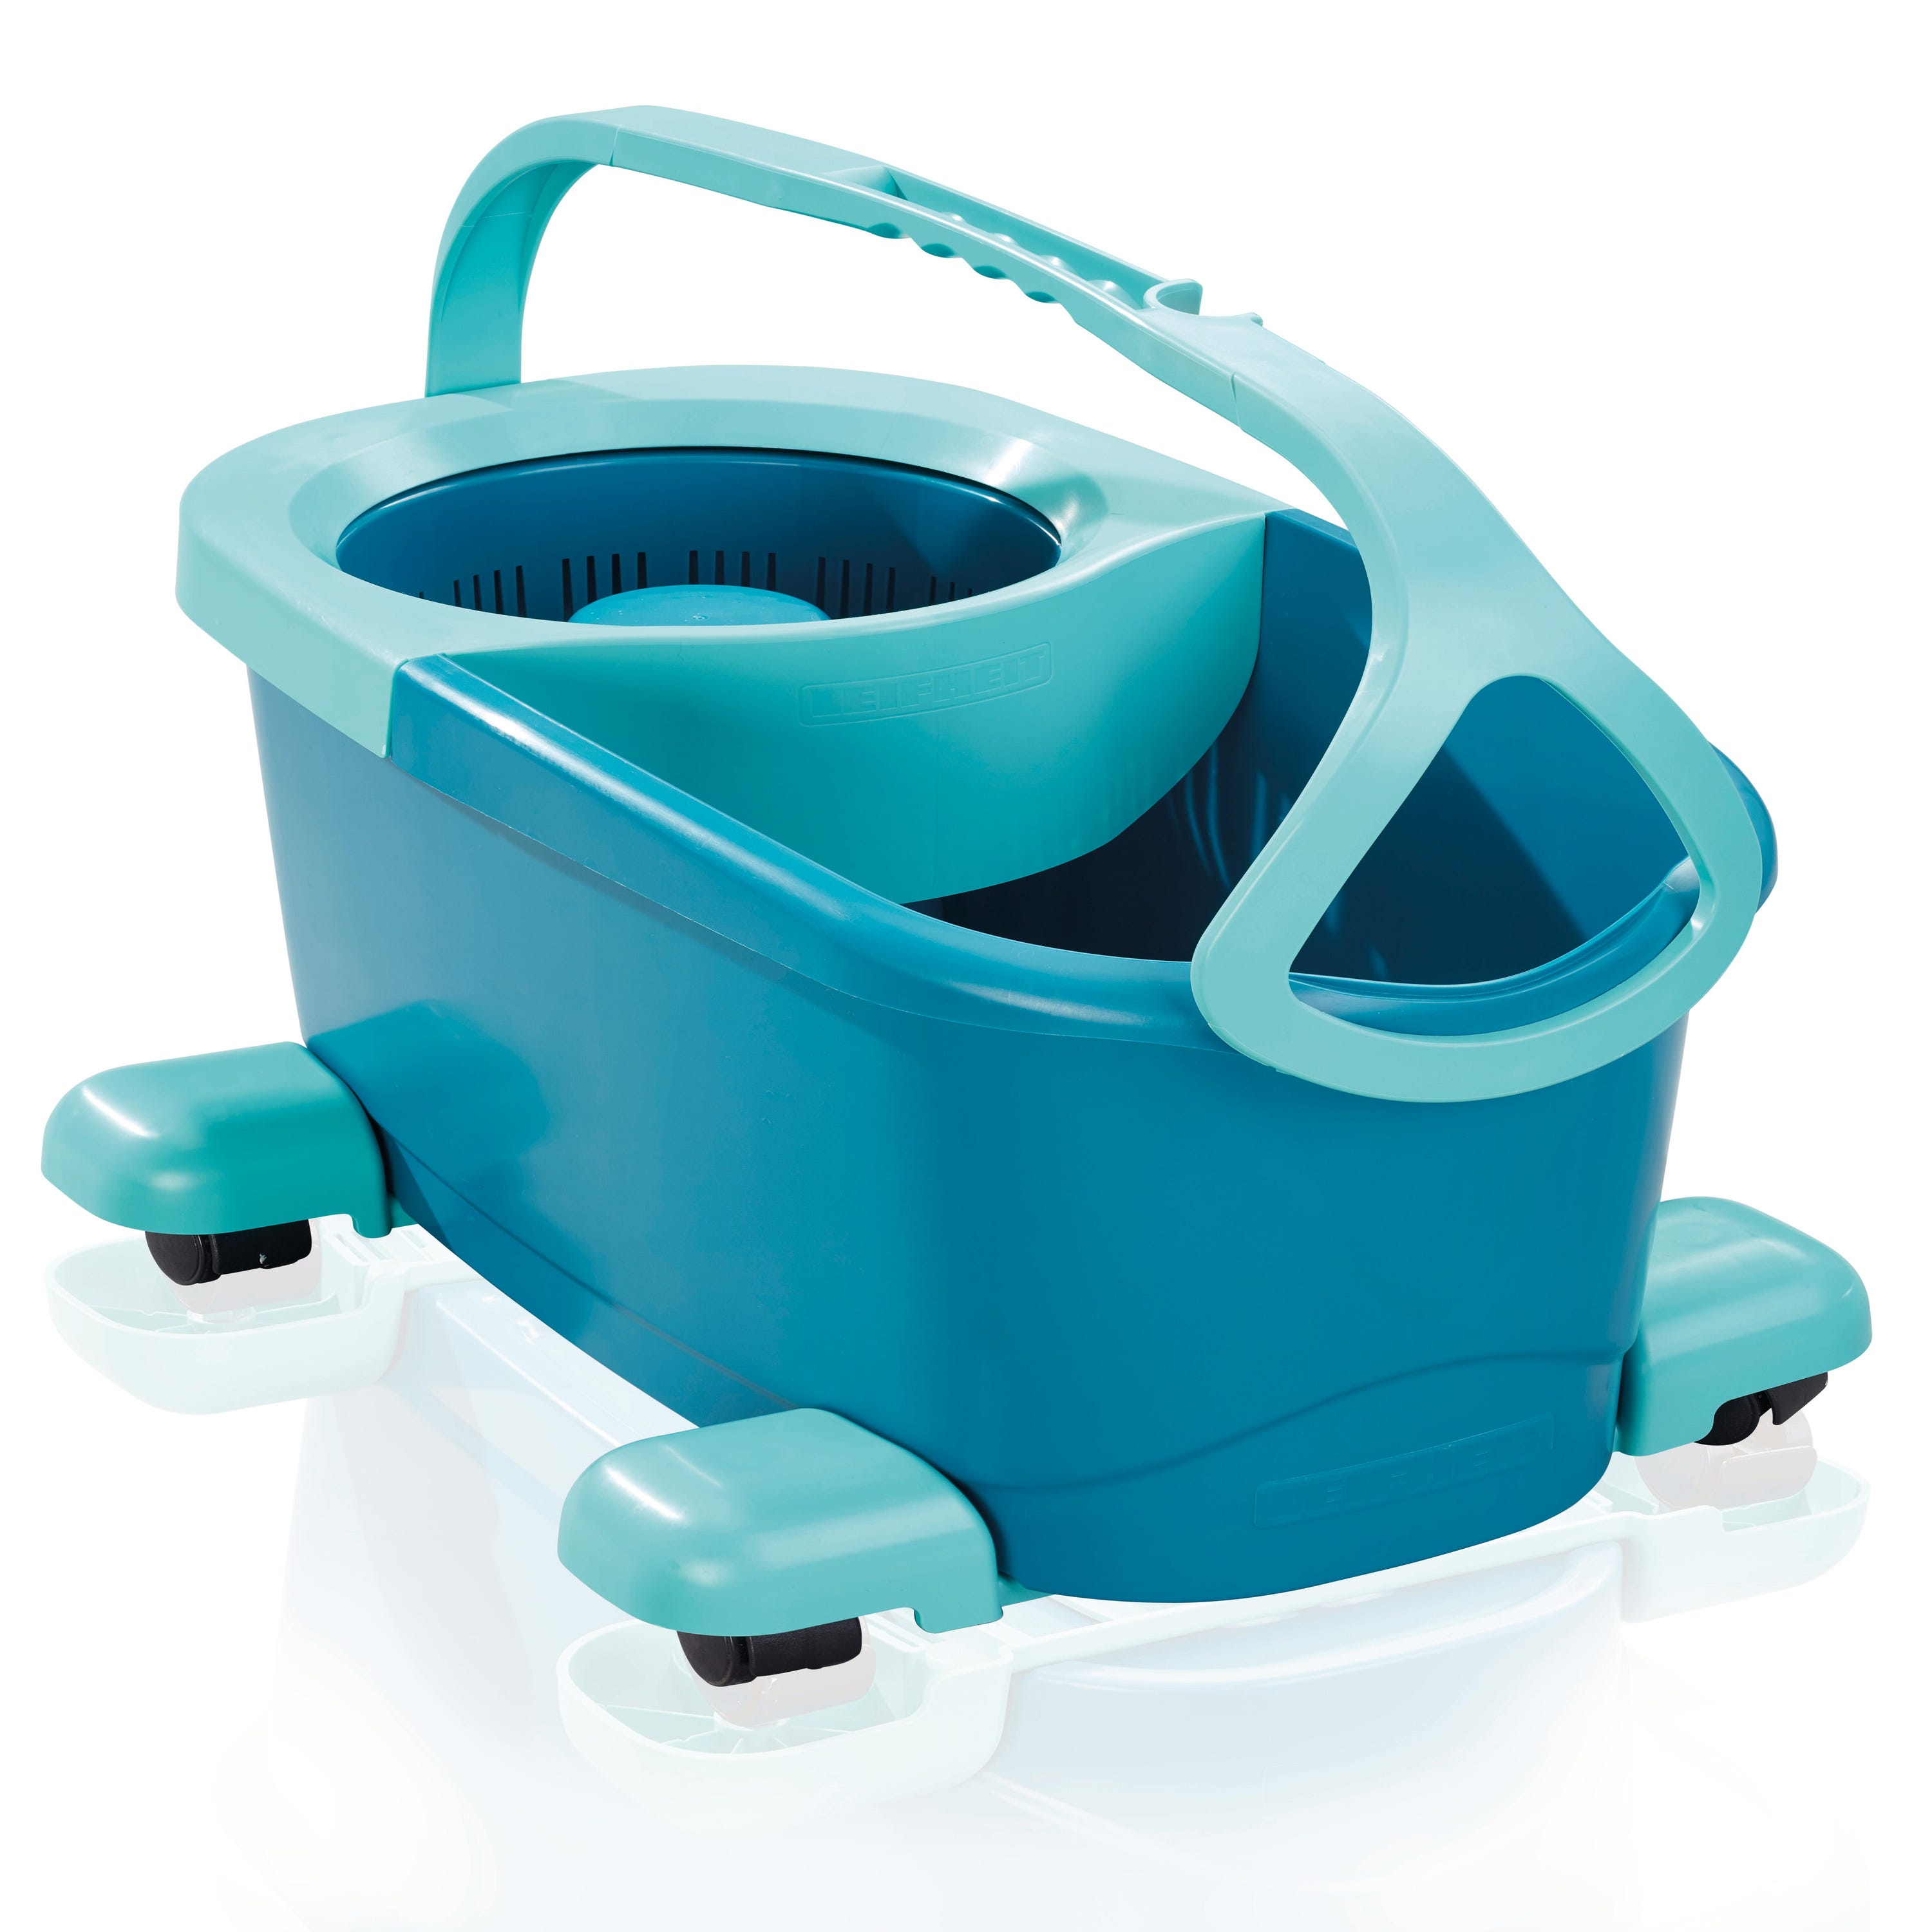 Leifheit Mop Pavimenti Blu, Lavapavimenti Professionale Flessibile